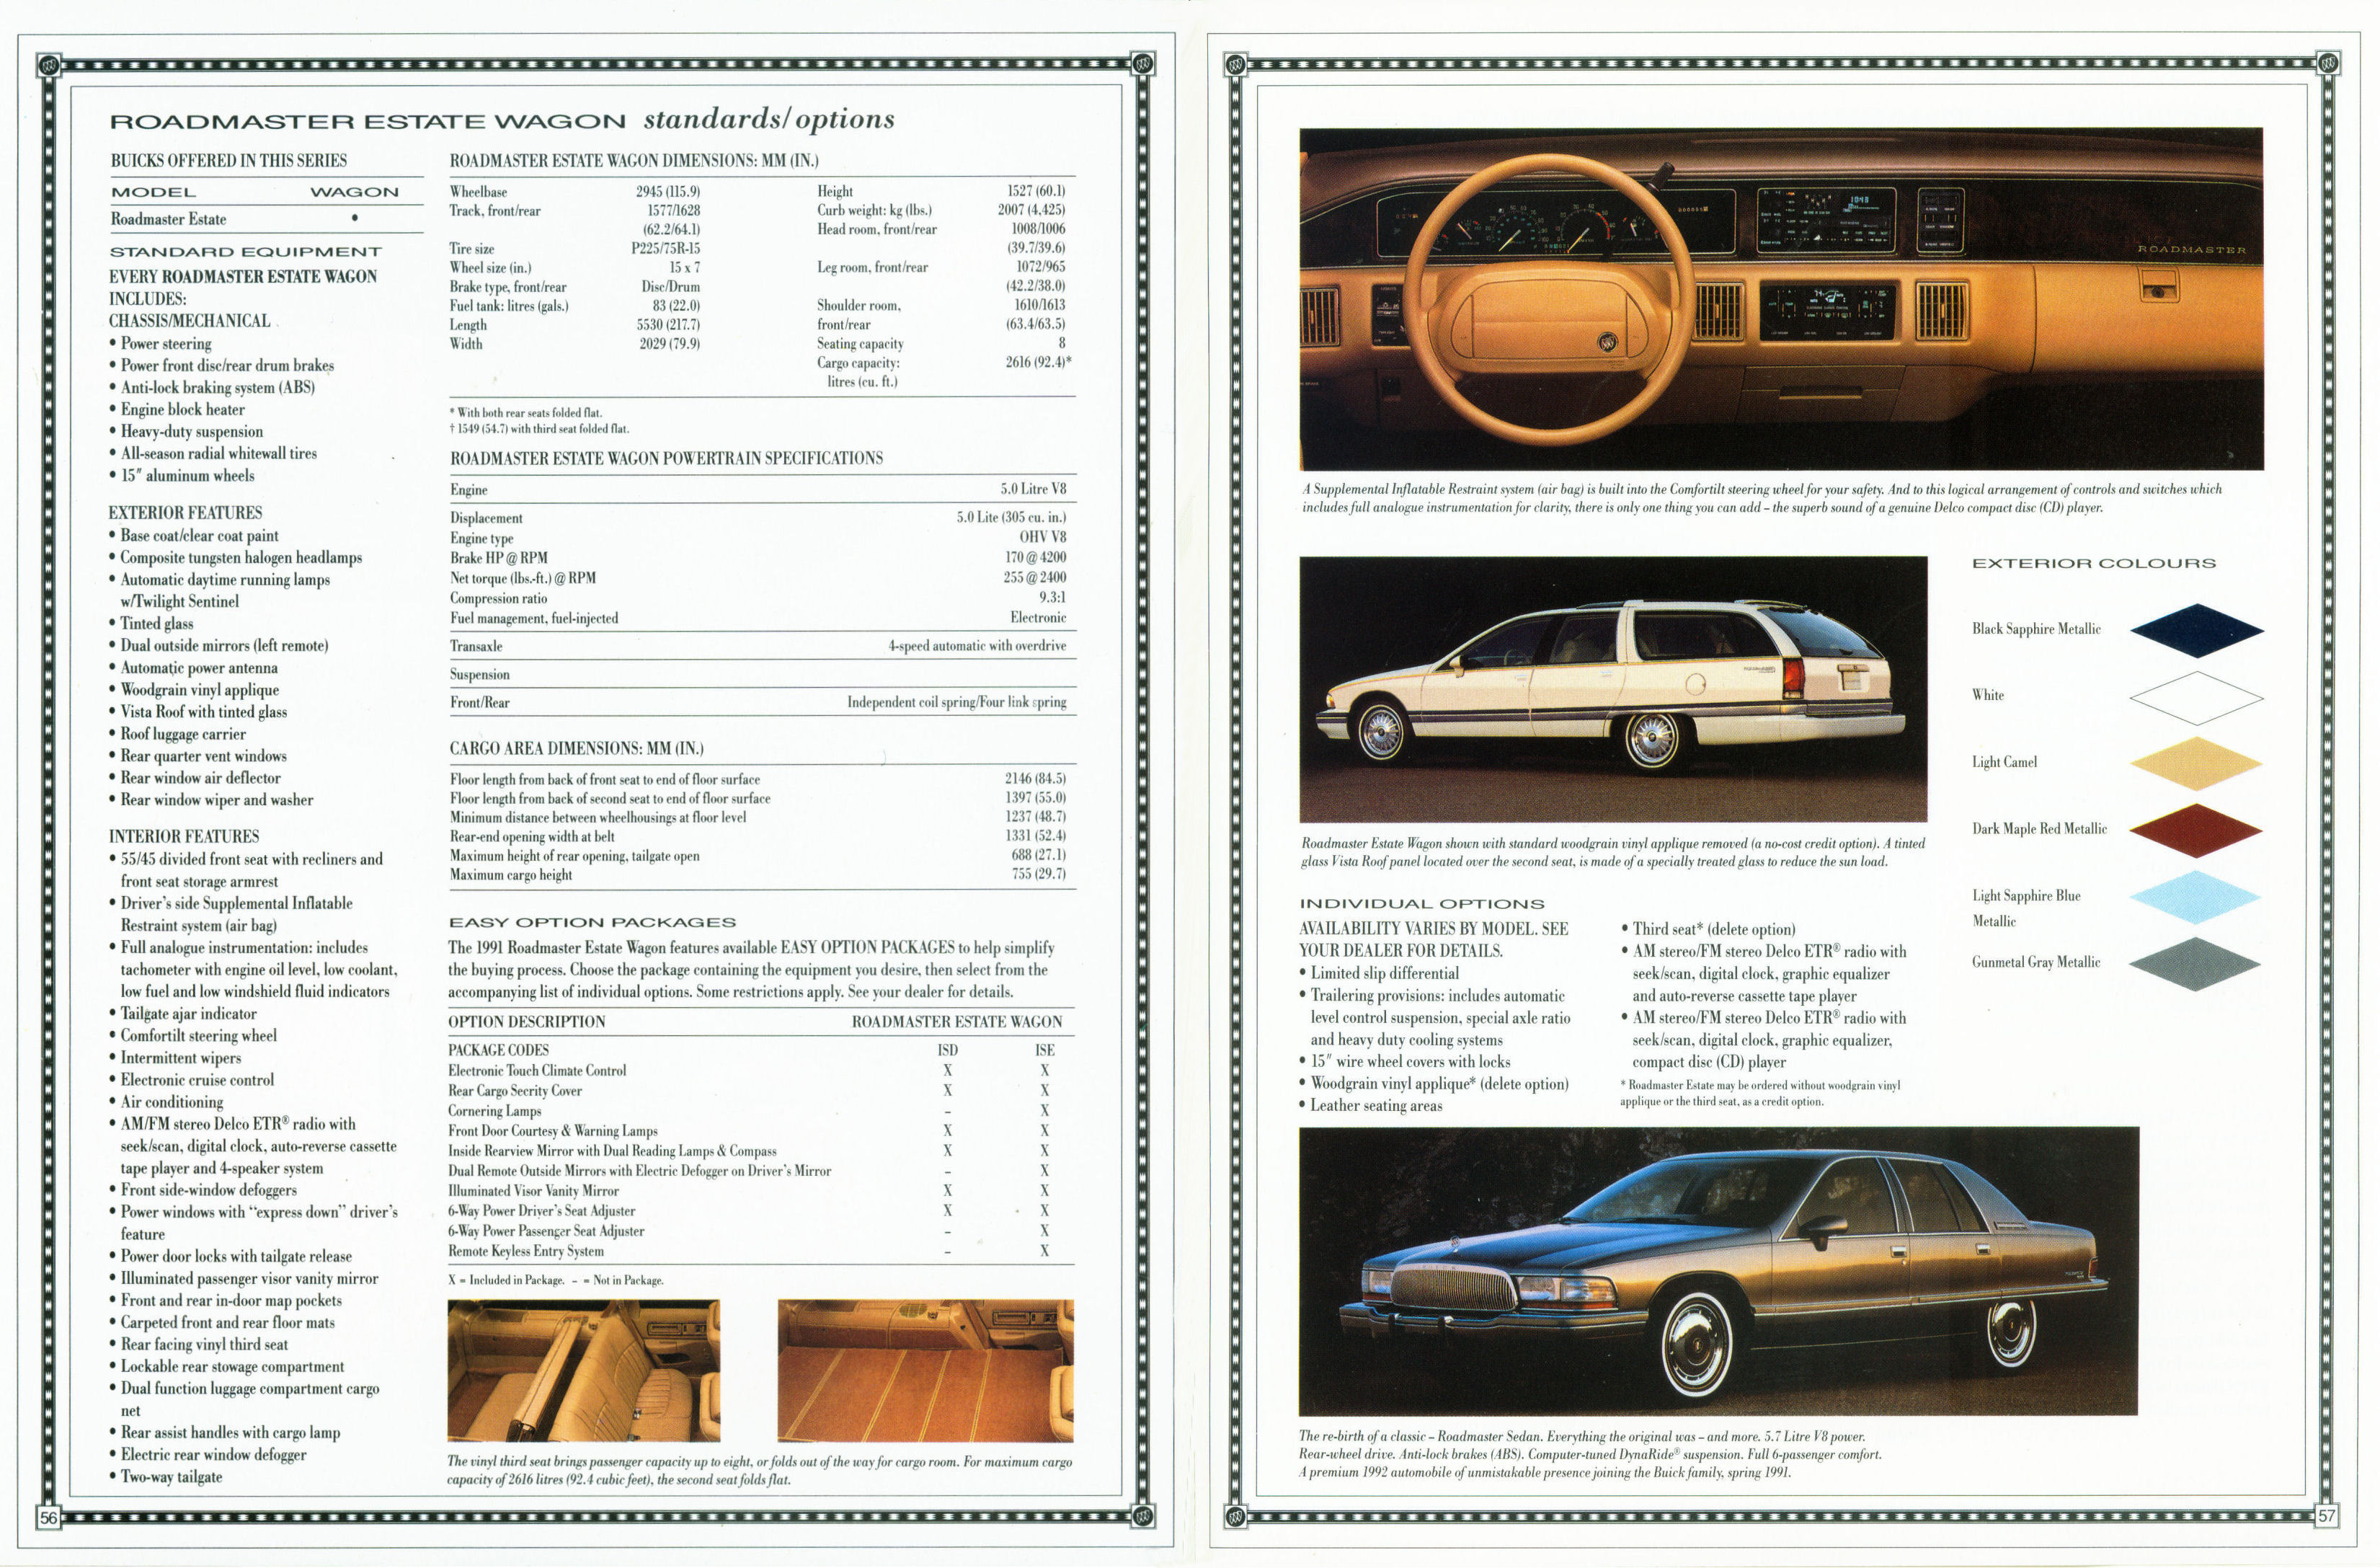 1991_Buick_Full_Line_Prestige_Cdn-56-57